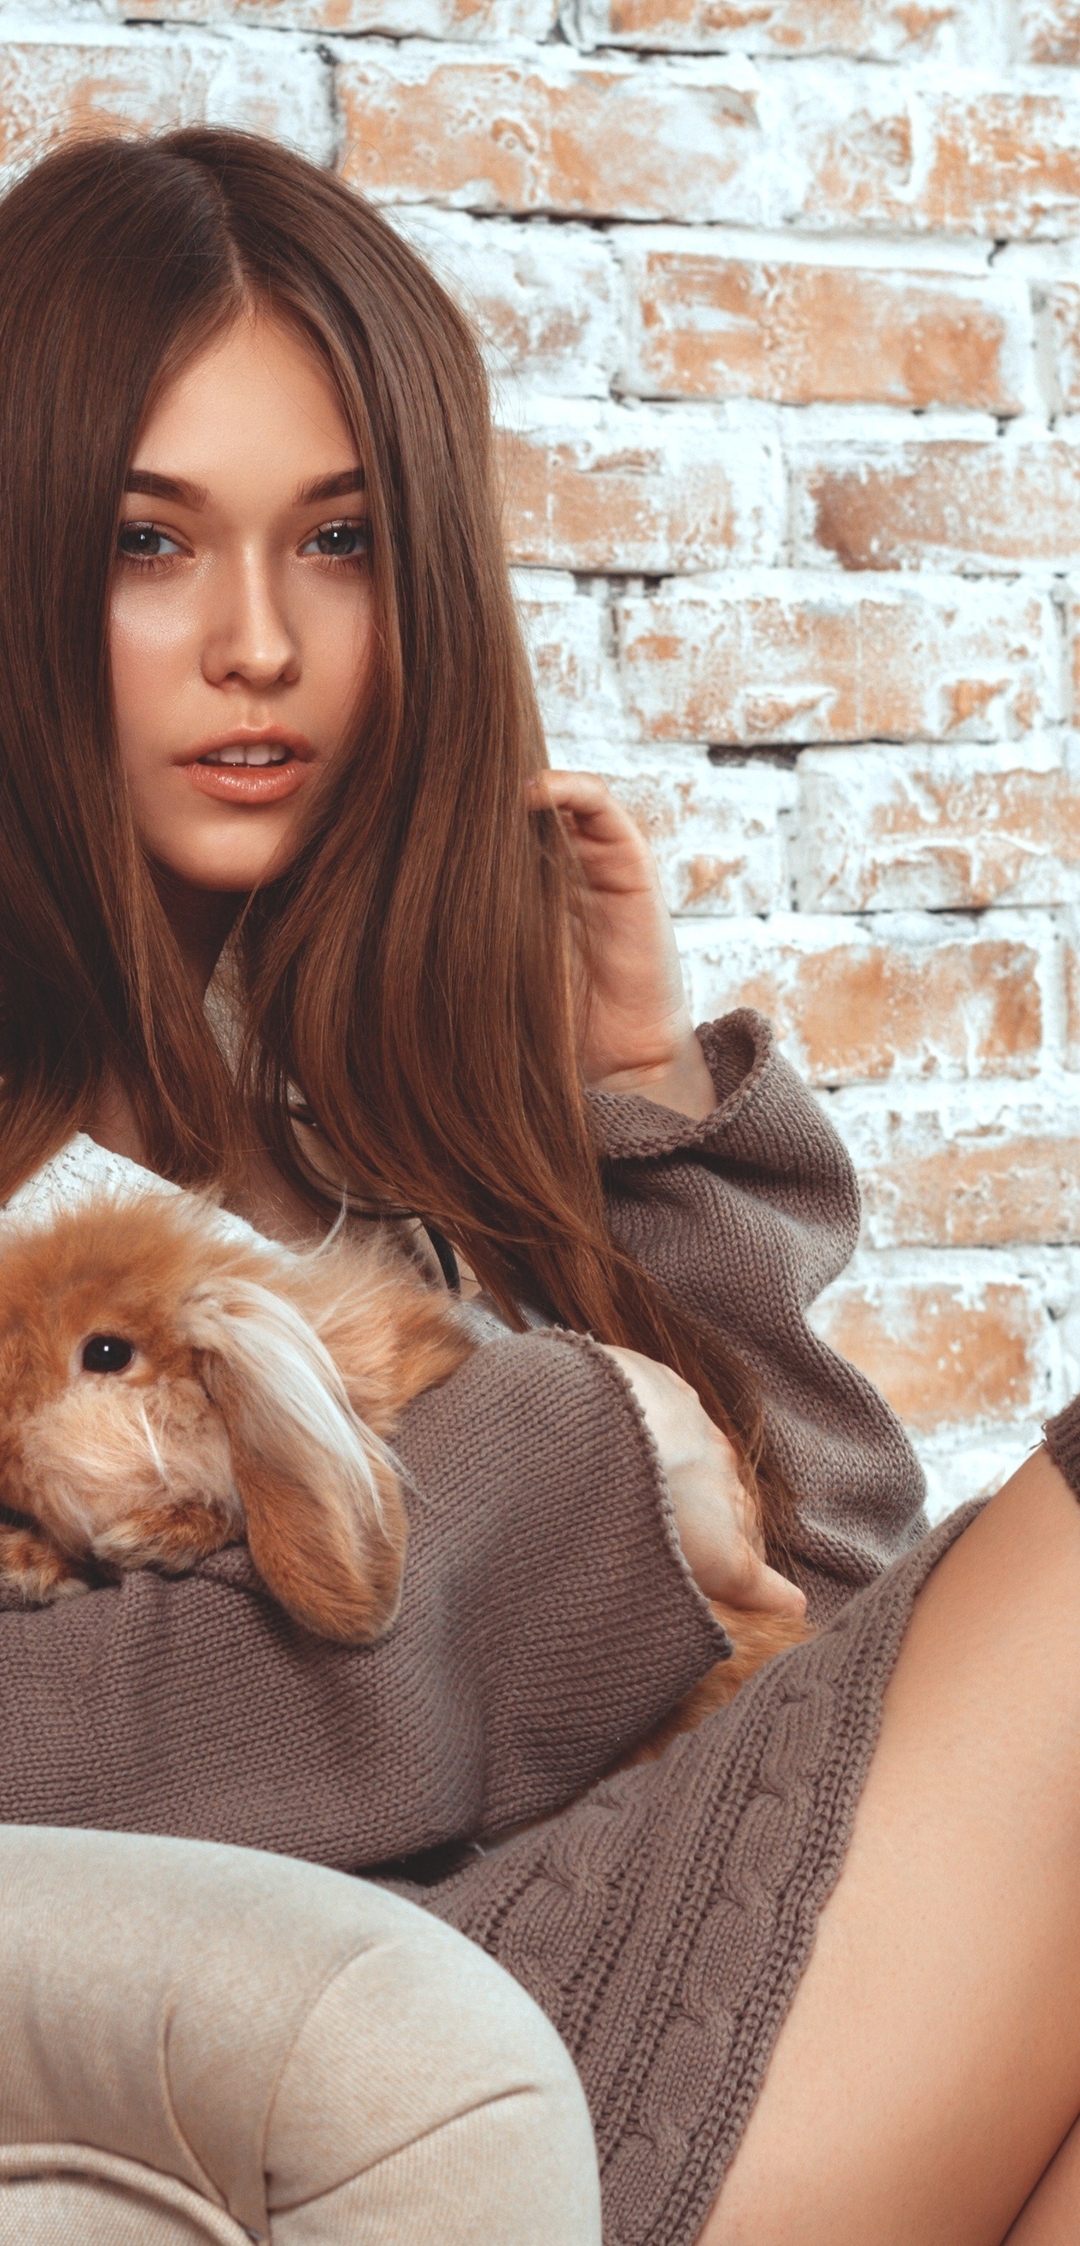 Image: Brunette, girl, long hair, rabbit, sitting, armchair, brick wall